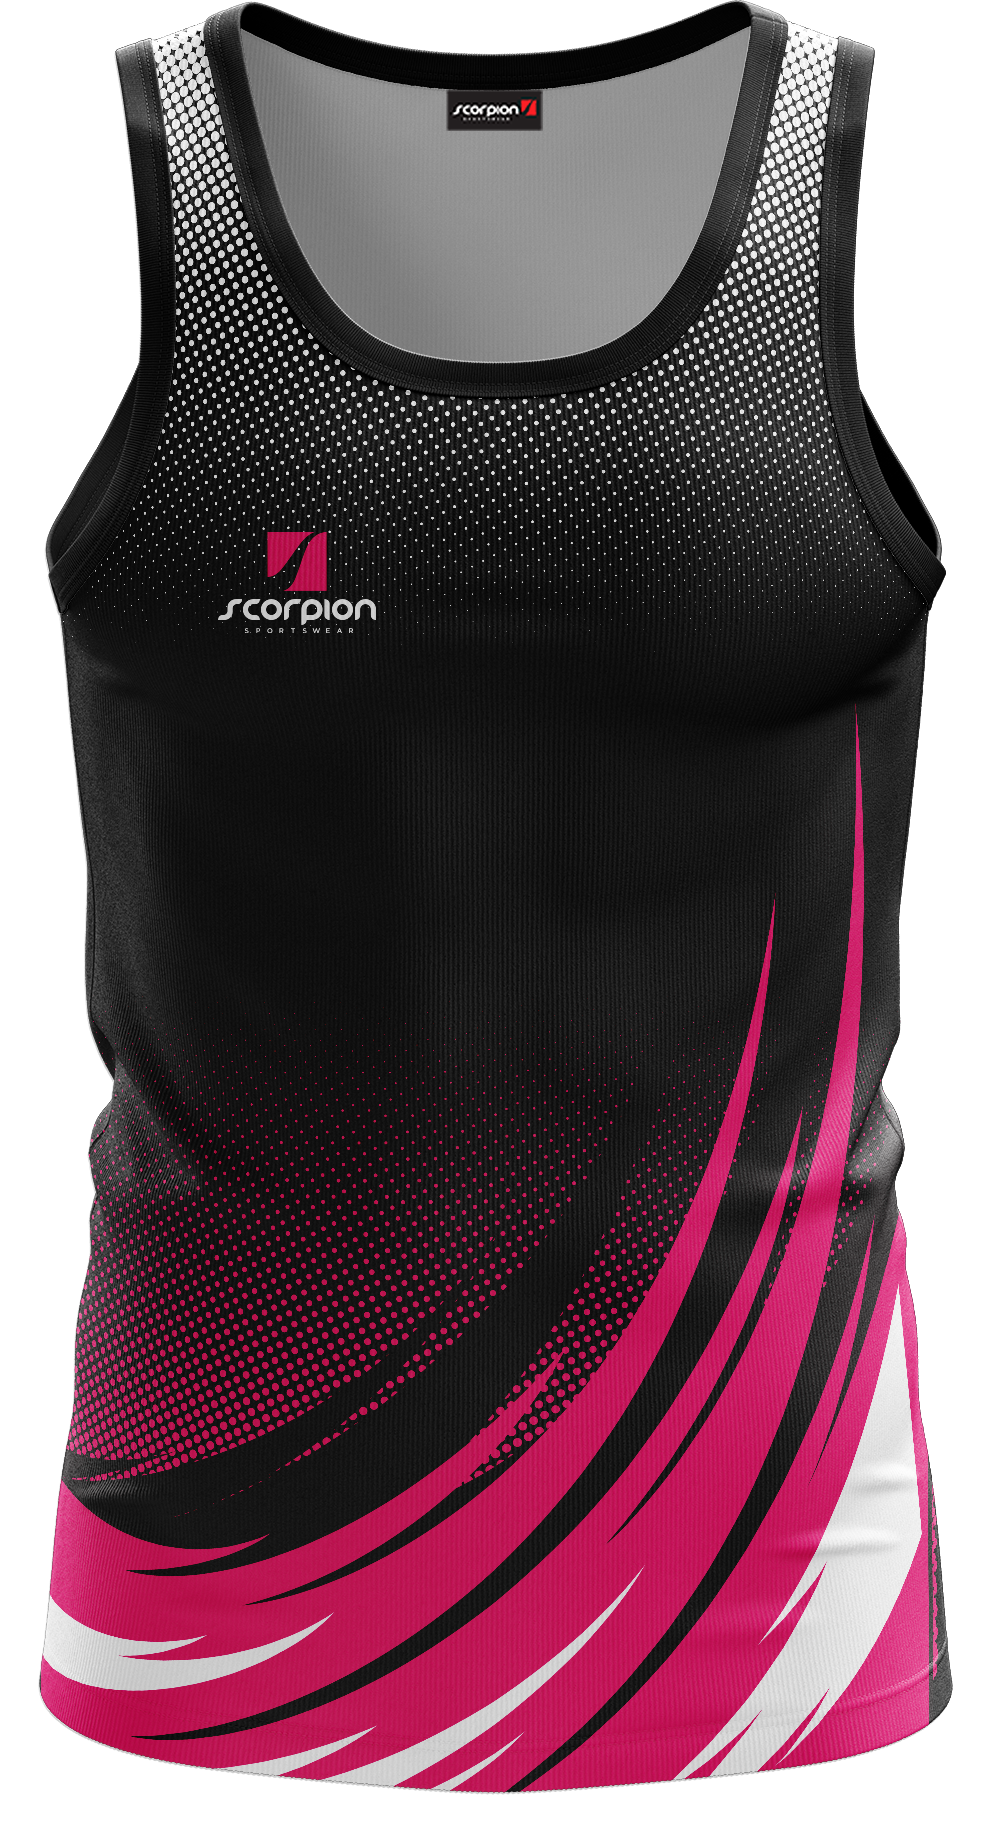 Scorpion Vests Pattern 5 - Black/Pink/White